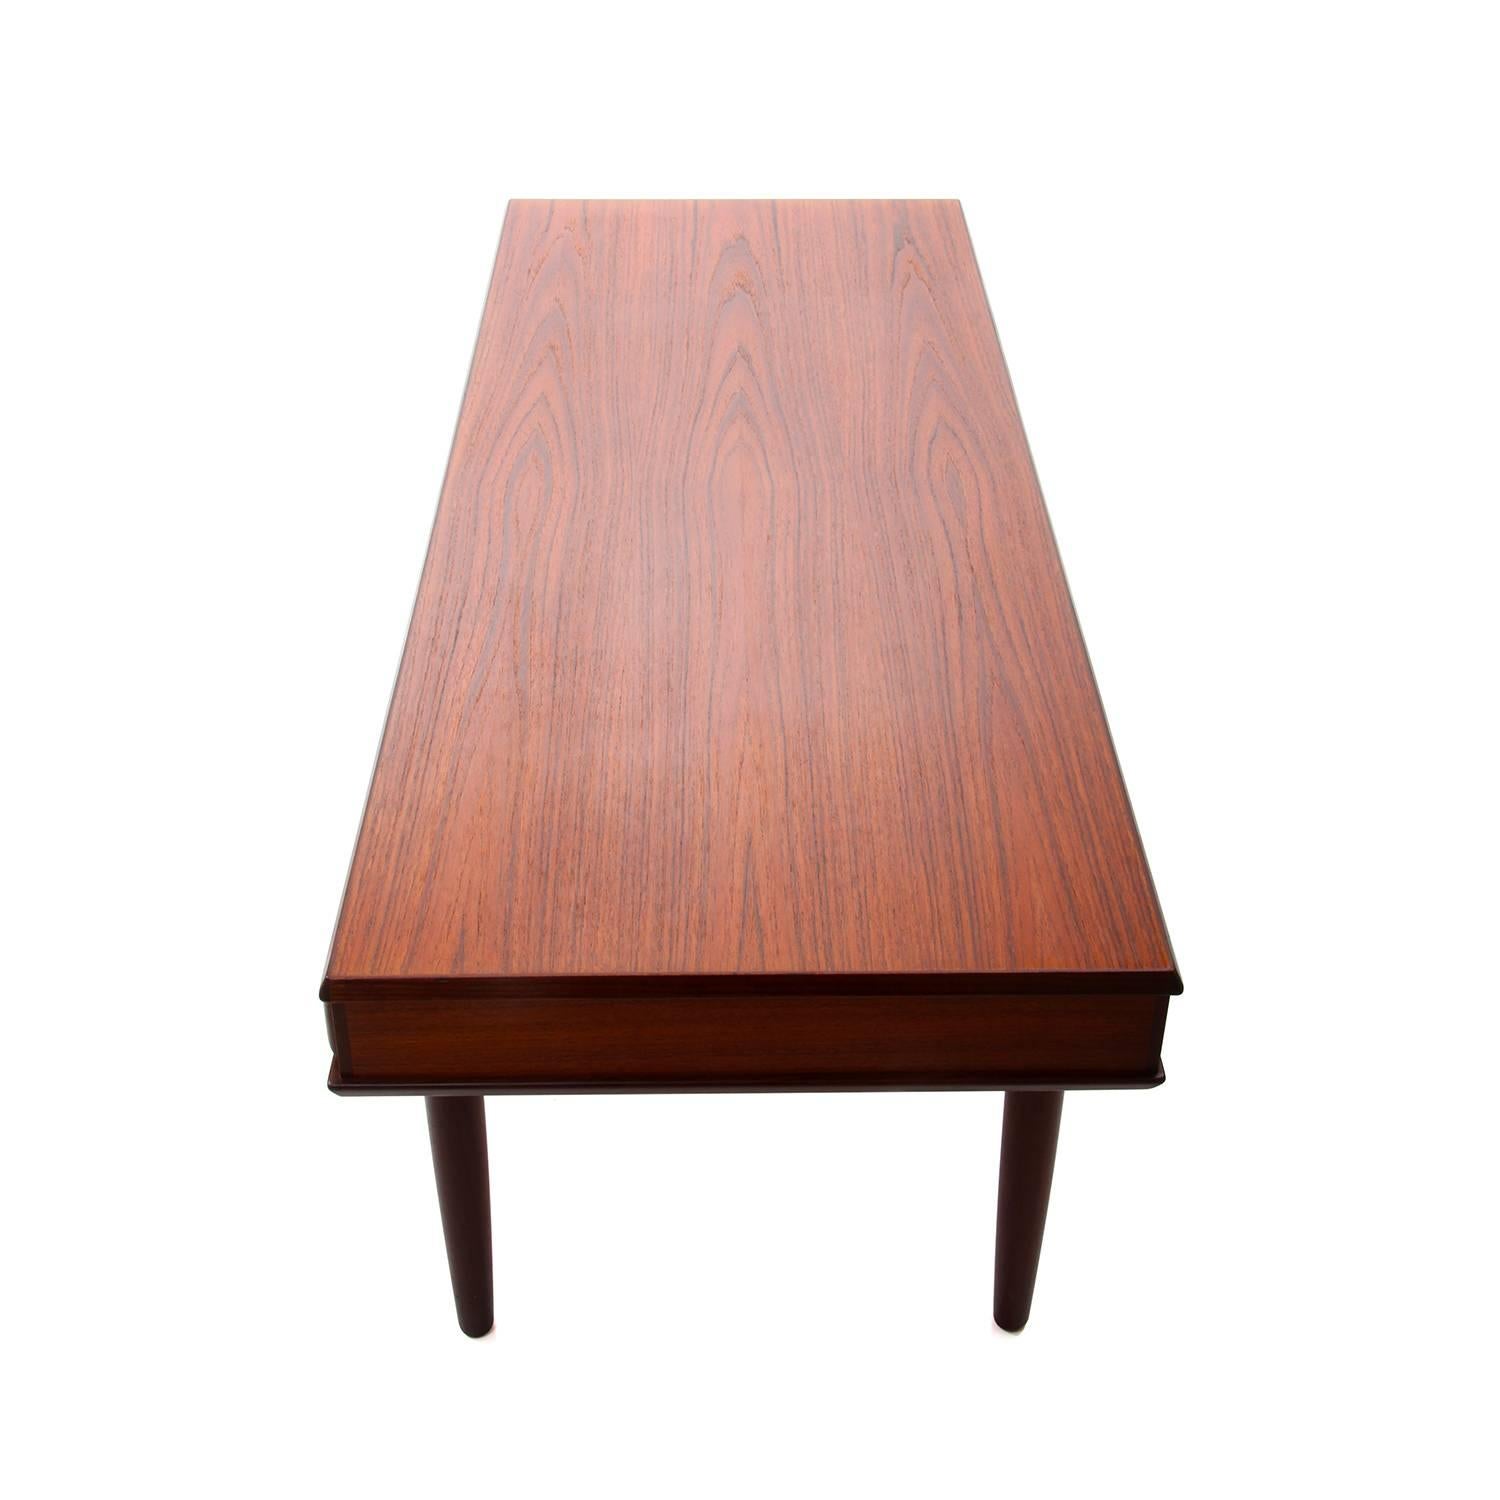 Teak Coffee Table by Danish Furniture Maker, 1960s Scandinavian Modern Table For Sale 3